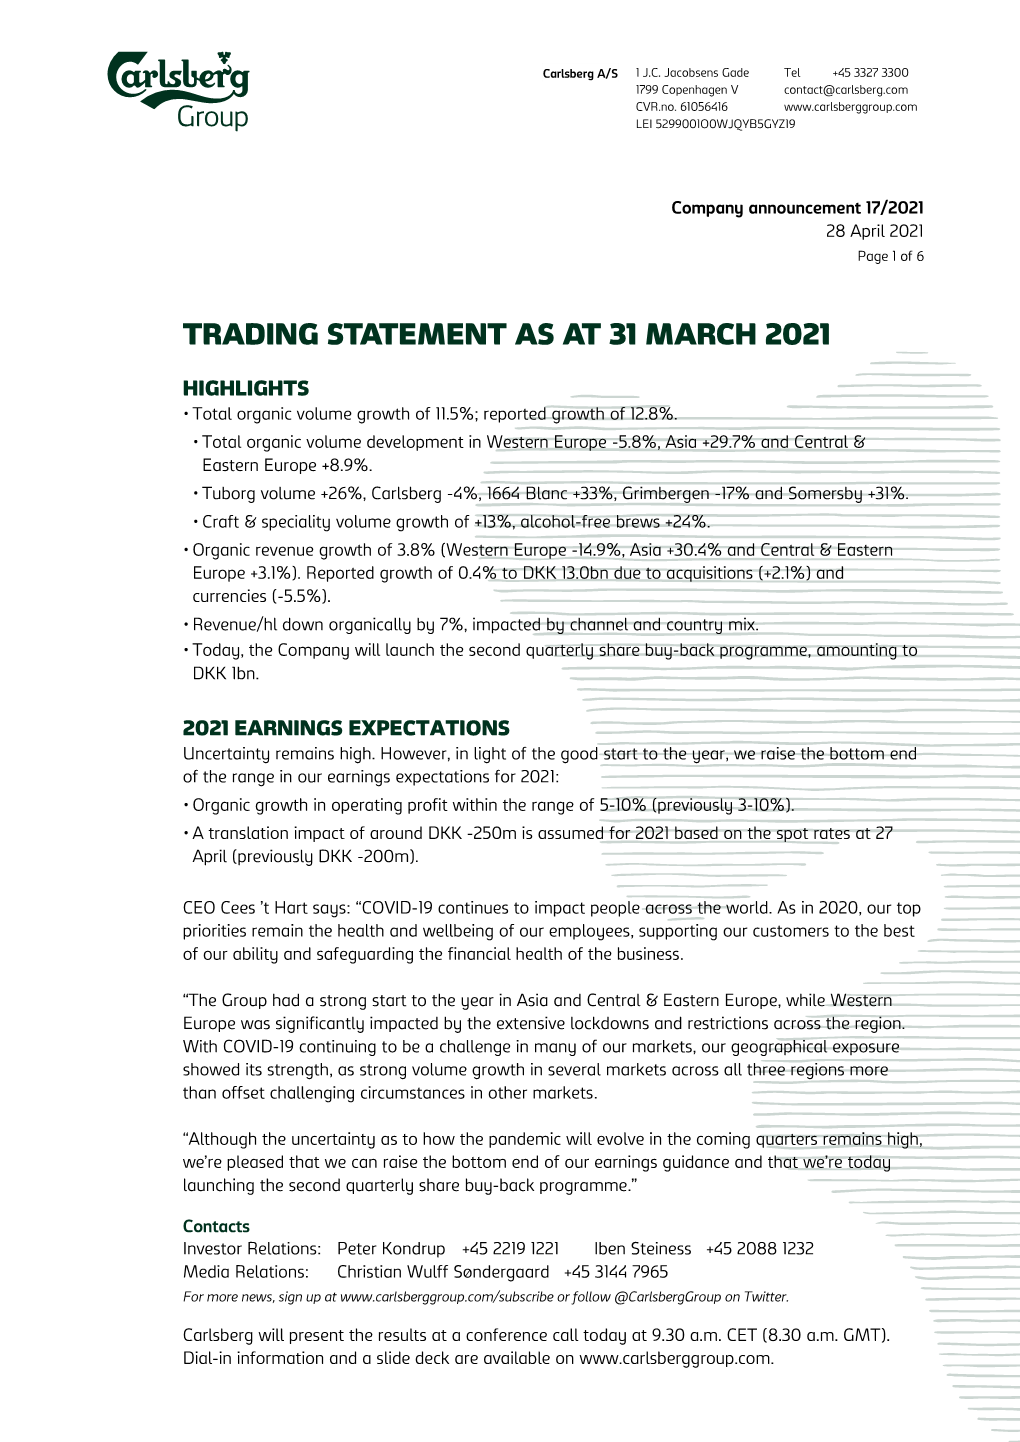 Q1 2021 Trading Statement